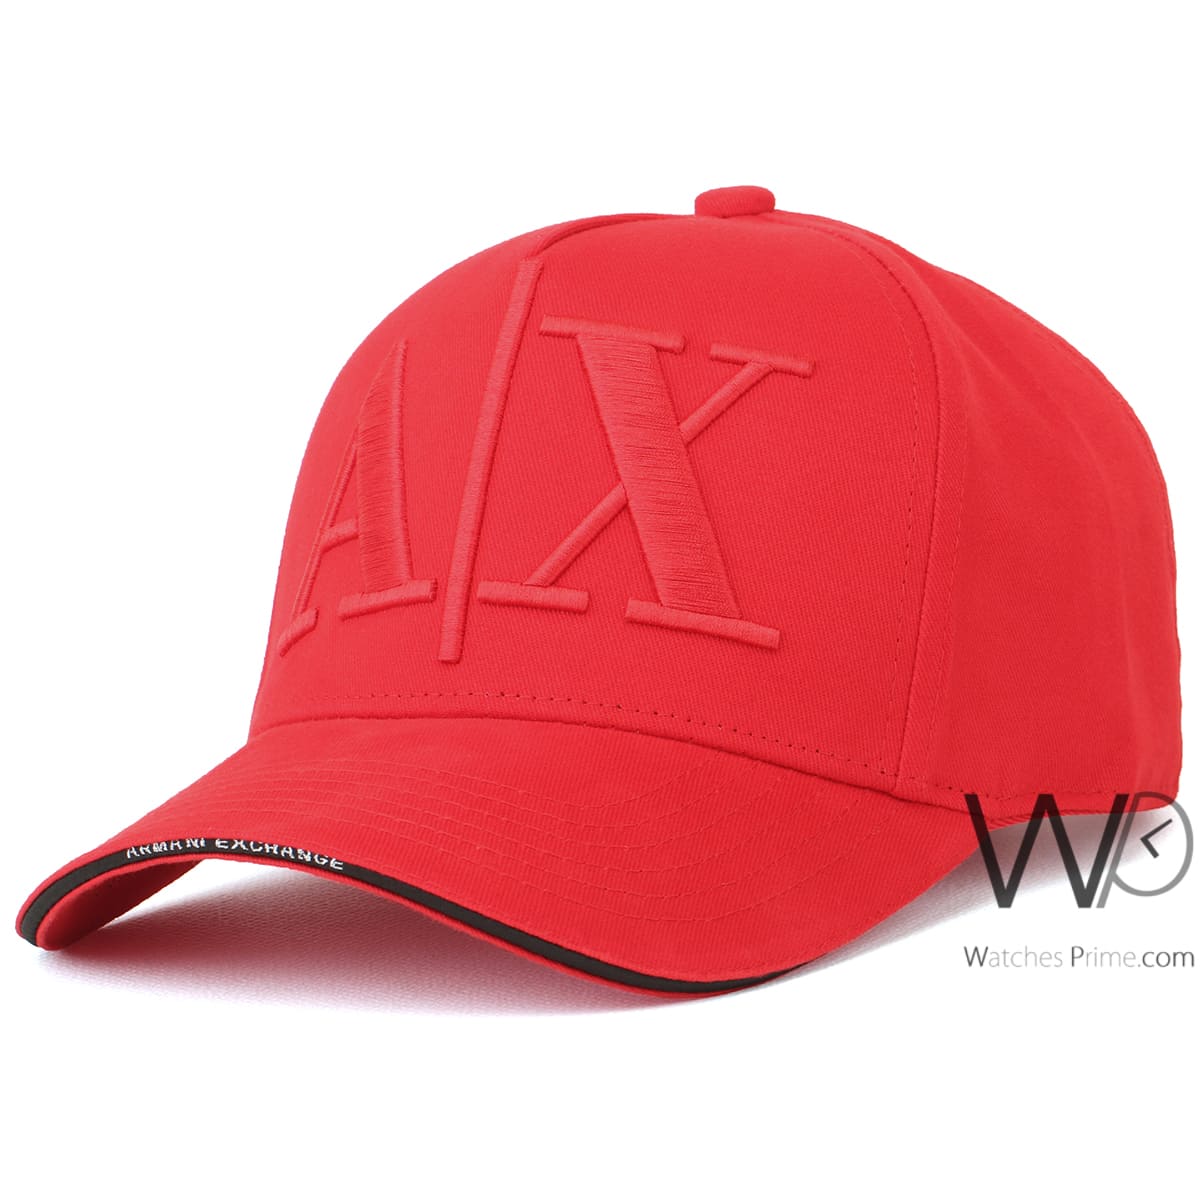 armani-exchange-baseball-cap-red-cotton-ax-hat